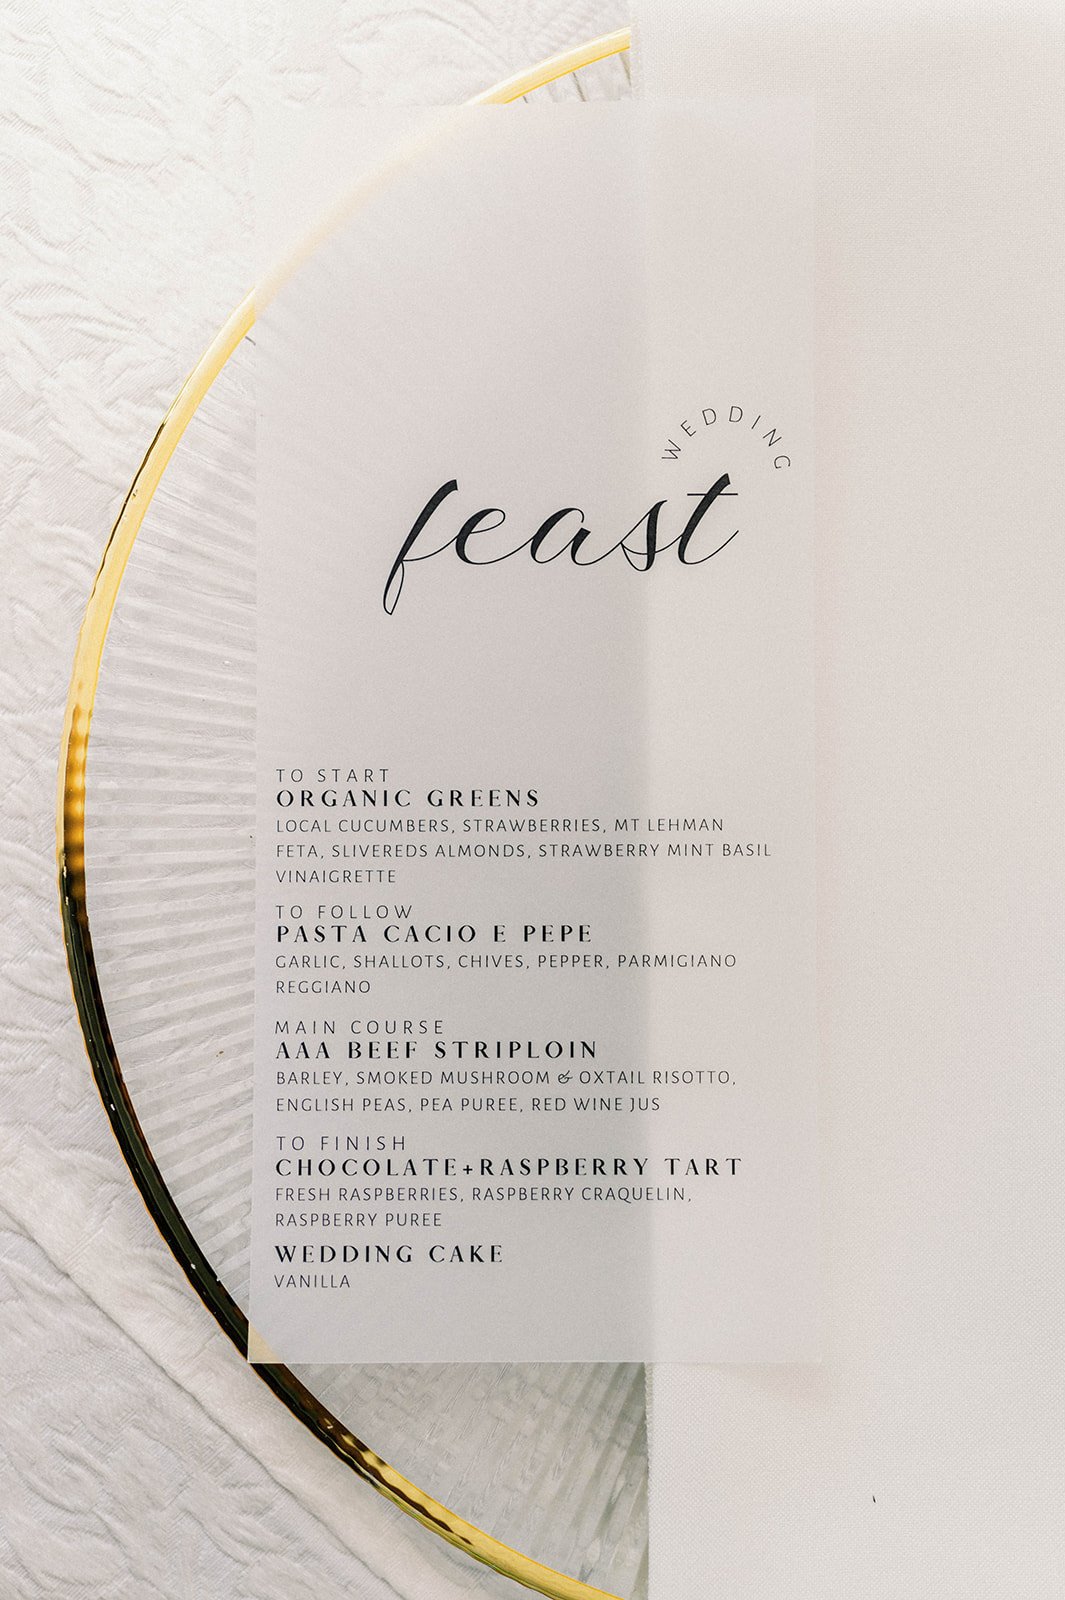 Wedding menu on golden encrusted plate promises feast